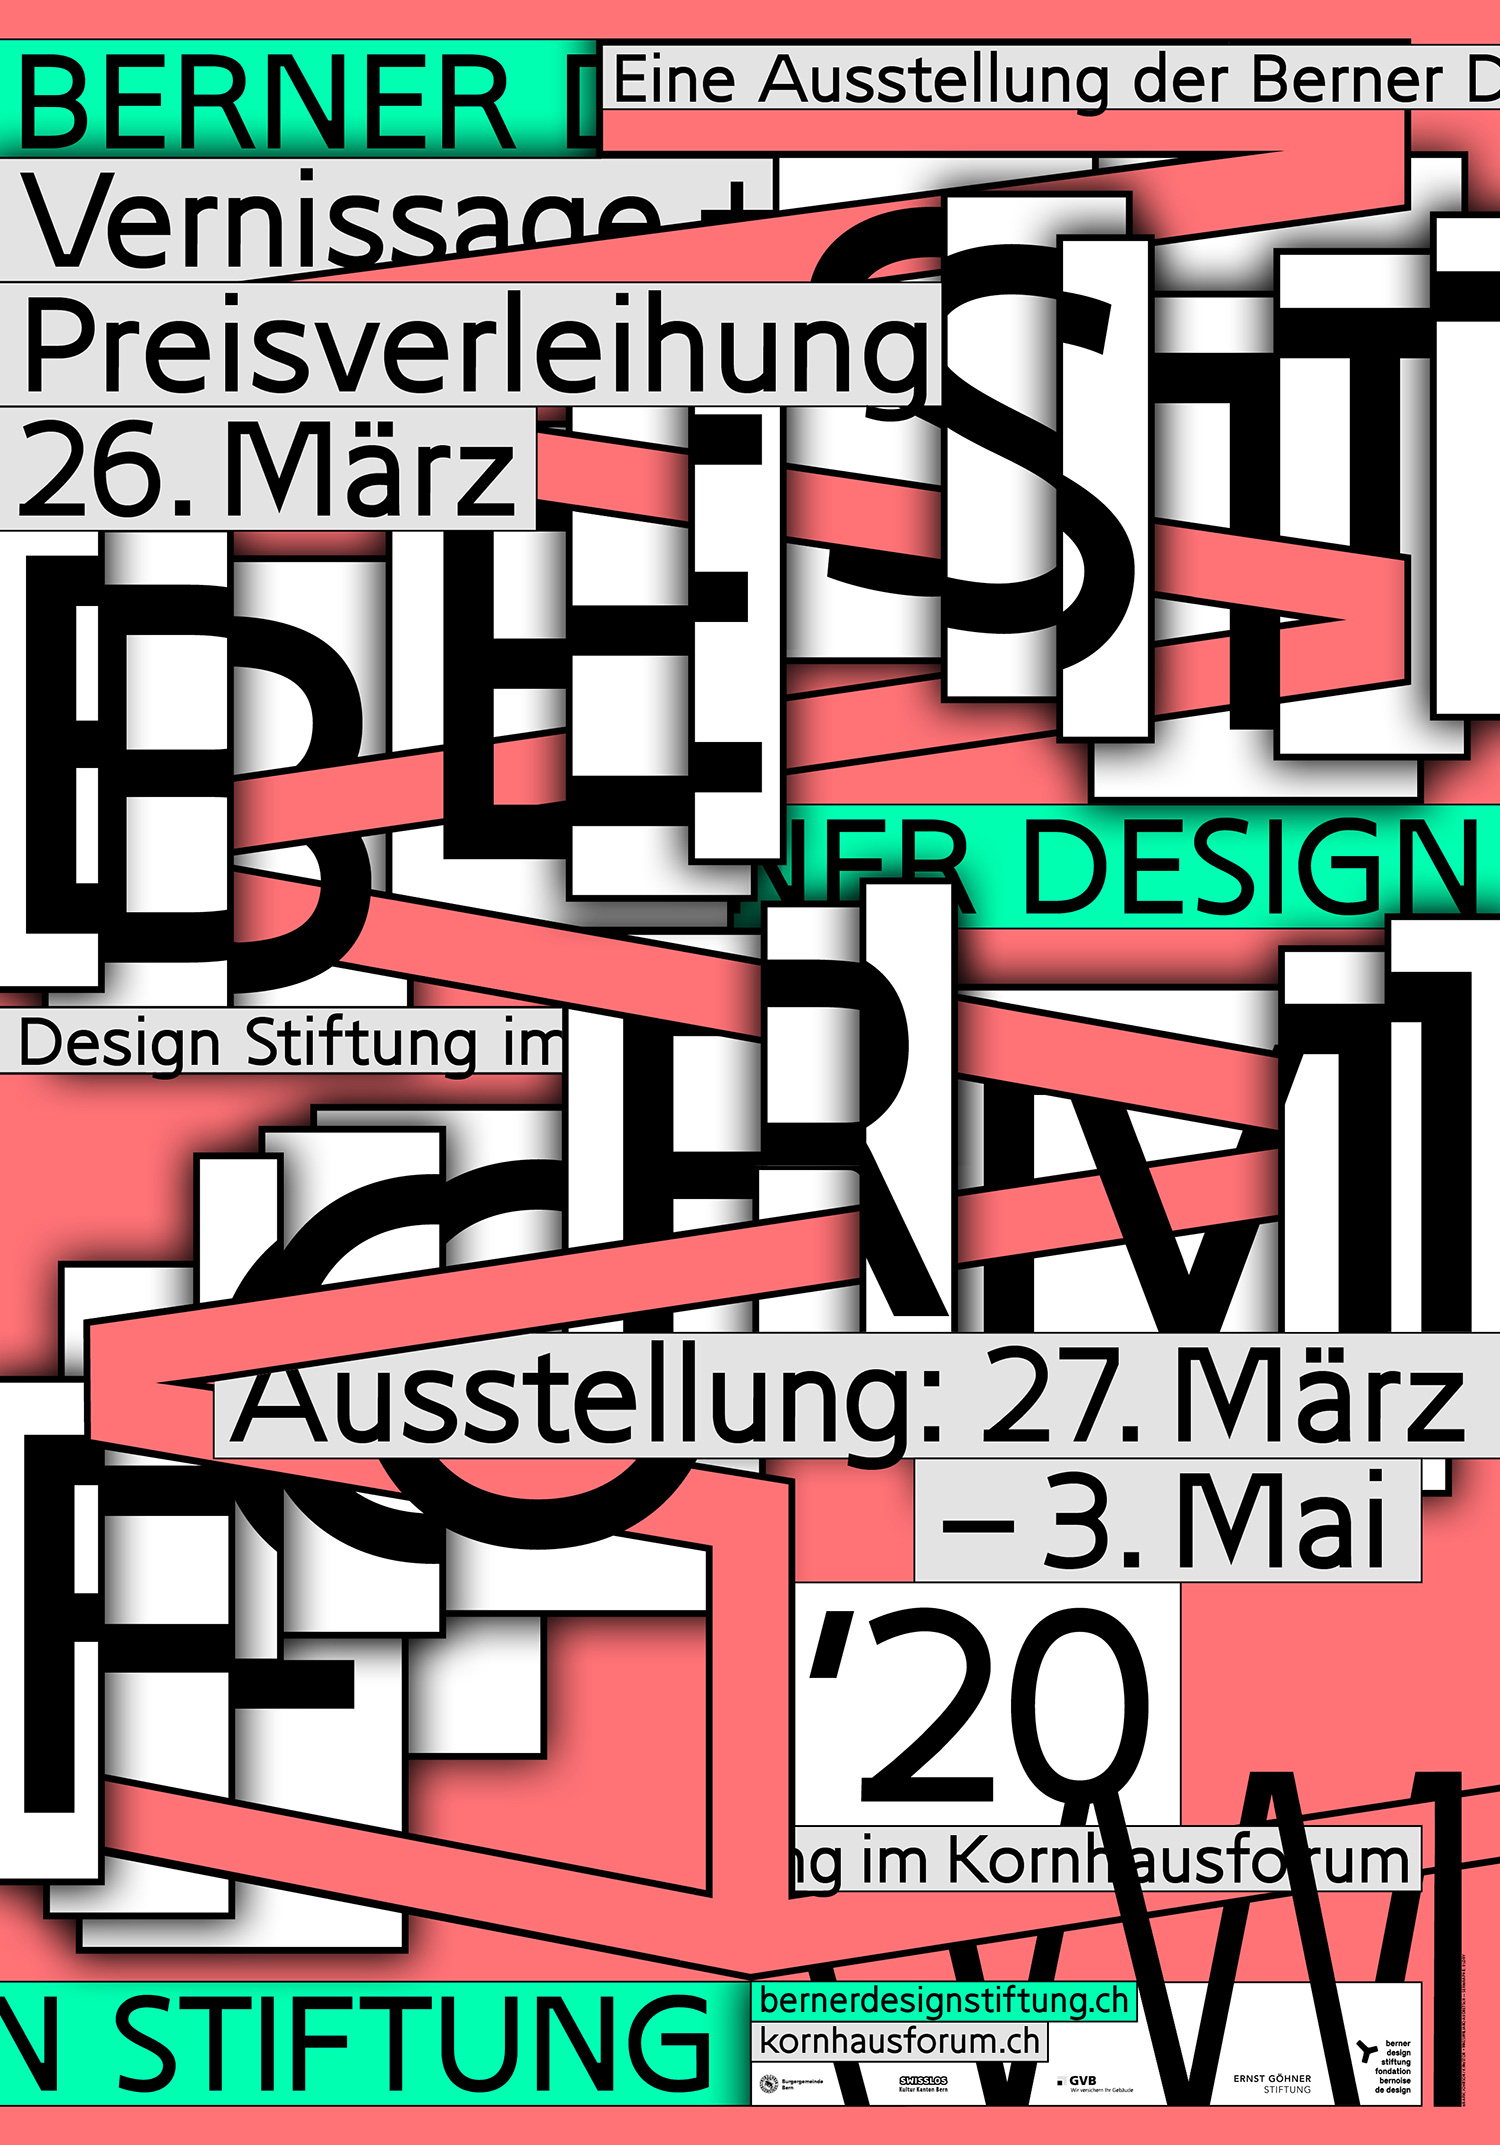 Berner Design Stiftung 2020